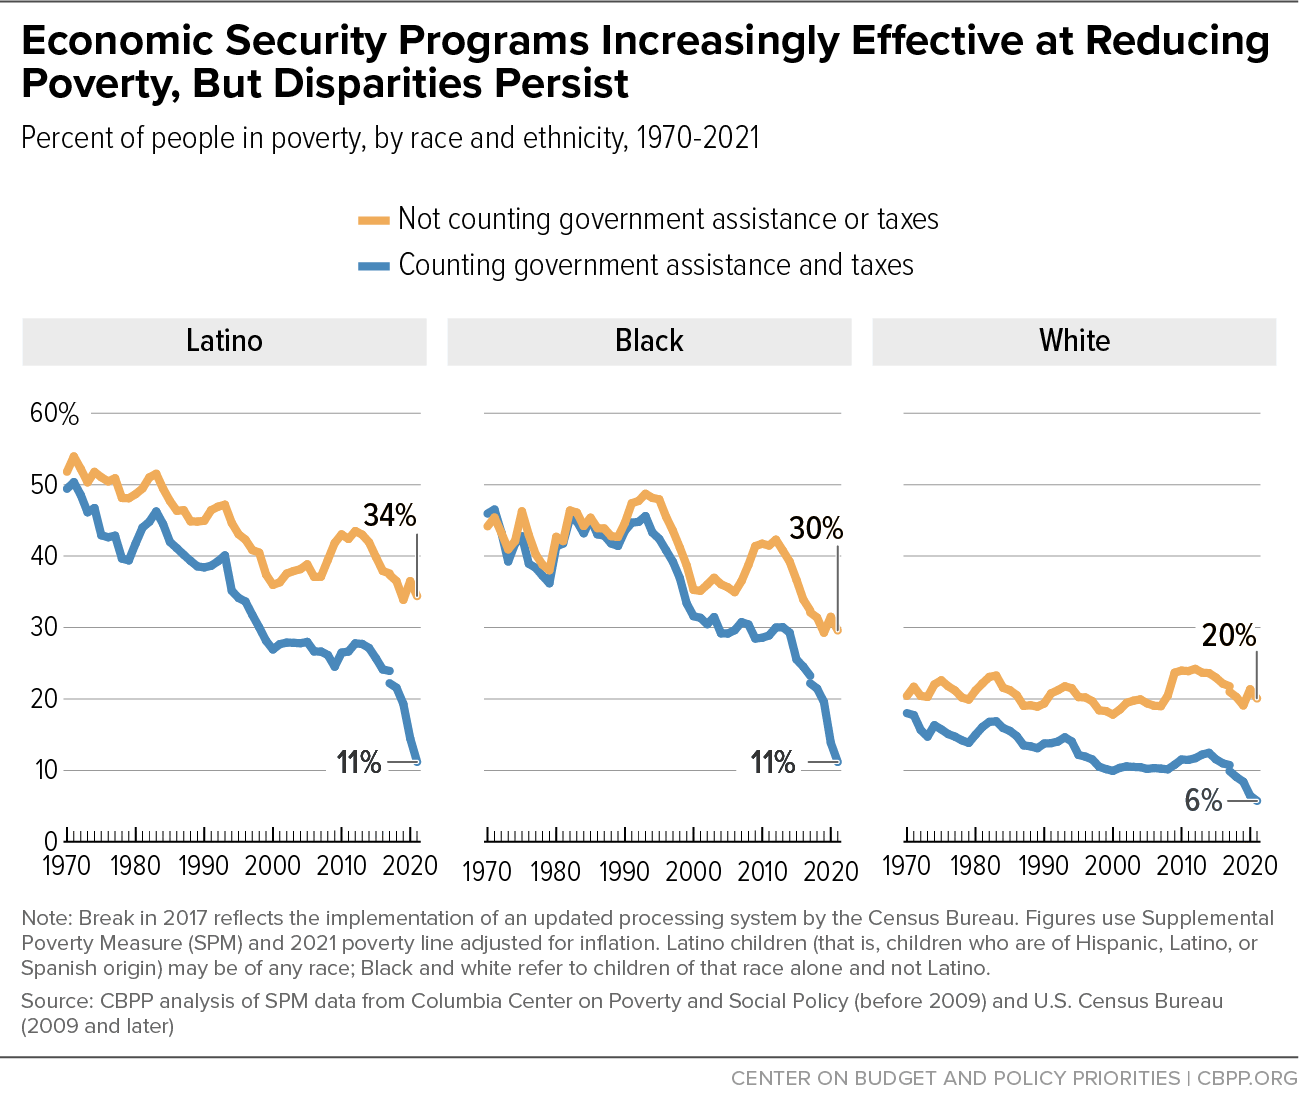 Economic Security Programs Increasingly Effective at Reducing Poverty, But Disparities Persist